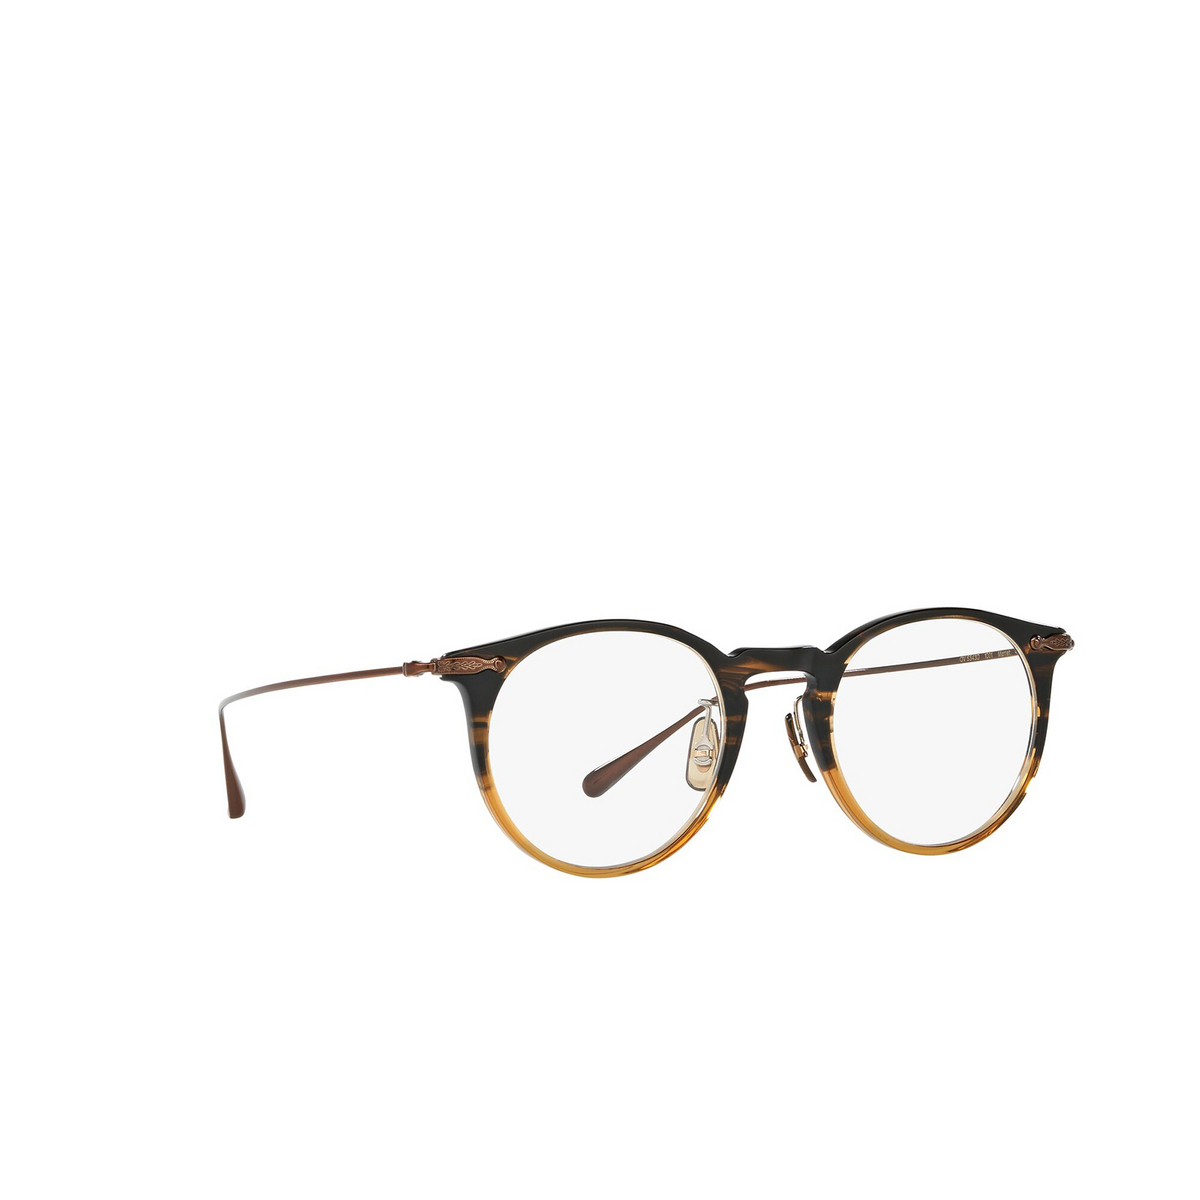 Oliver Peoples® Round Eyeglasses: Marret OV5343D color Honey Havana 1001 - three-quarters view.